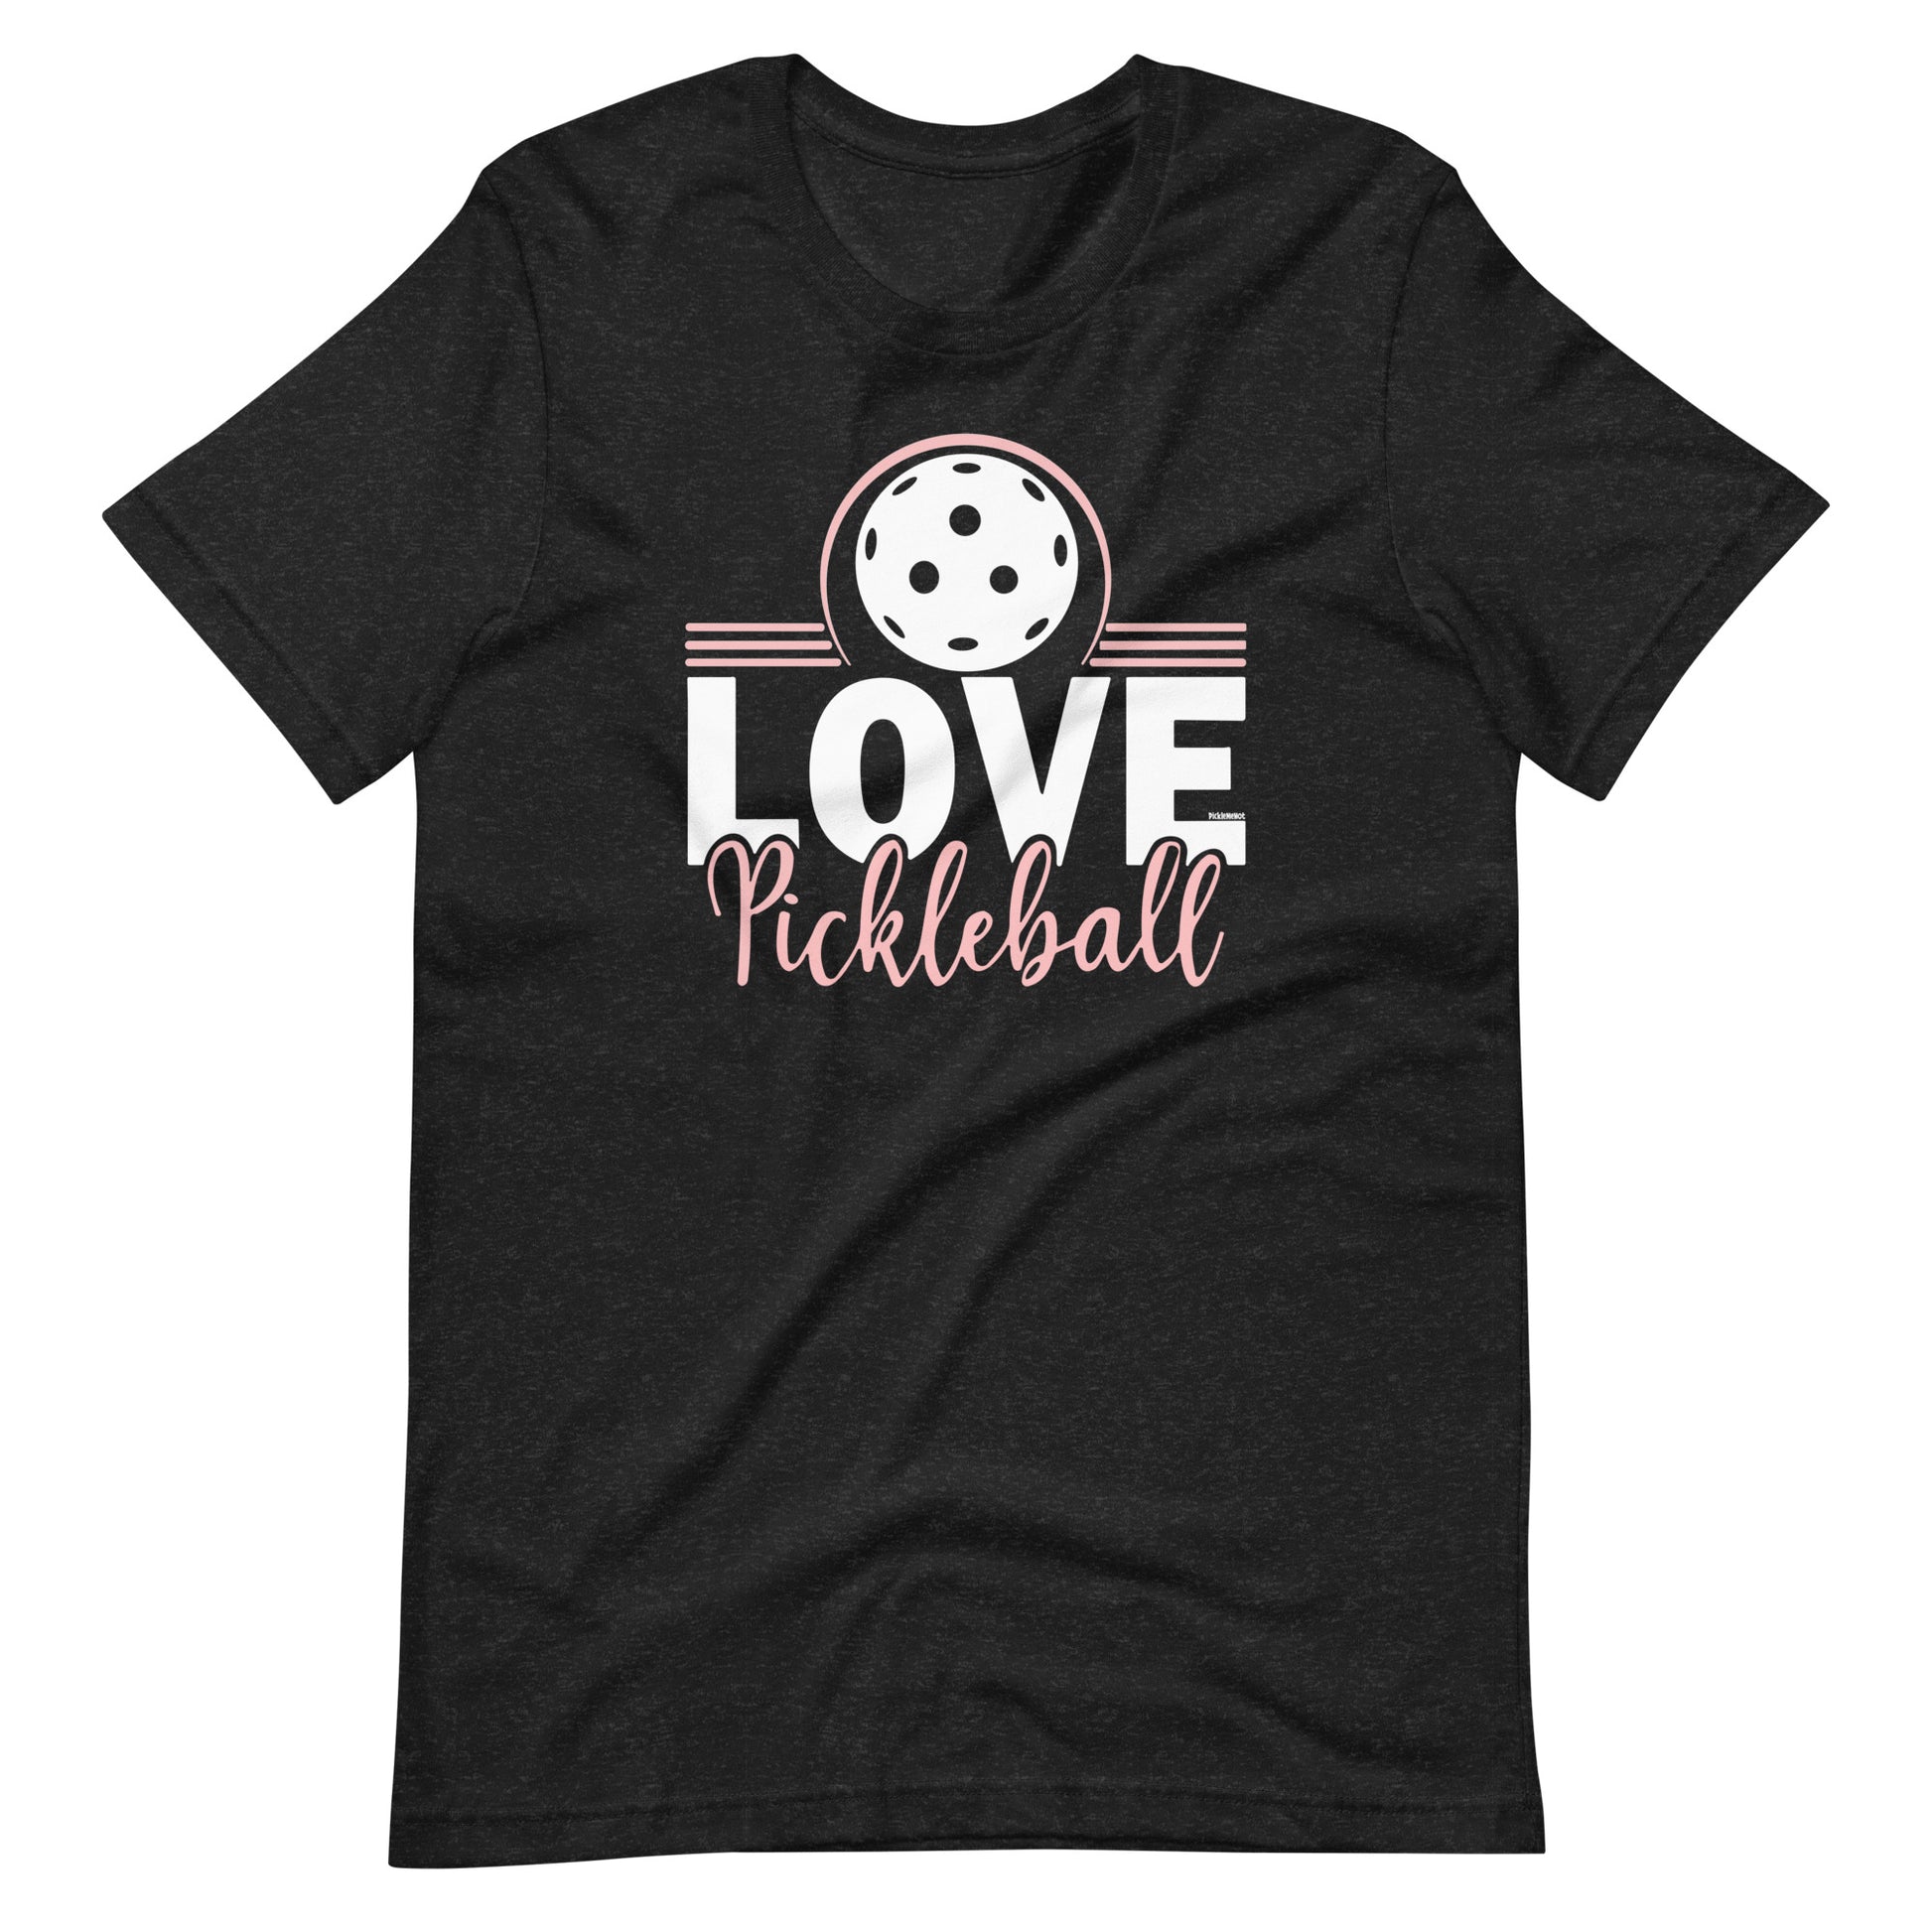 Fun Pickleball Graphic: "Love Pickleball," Womens Black Heather Unisex T-Shirt